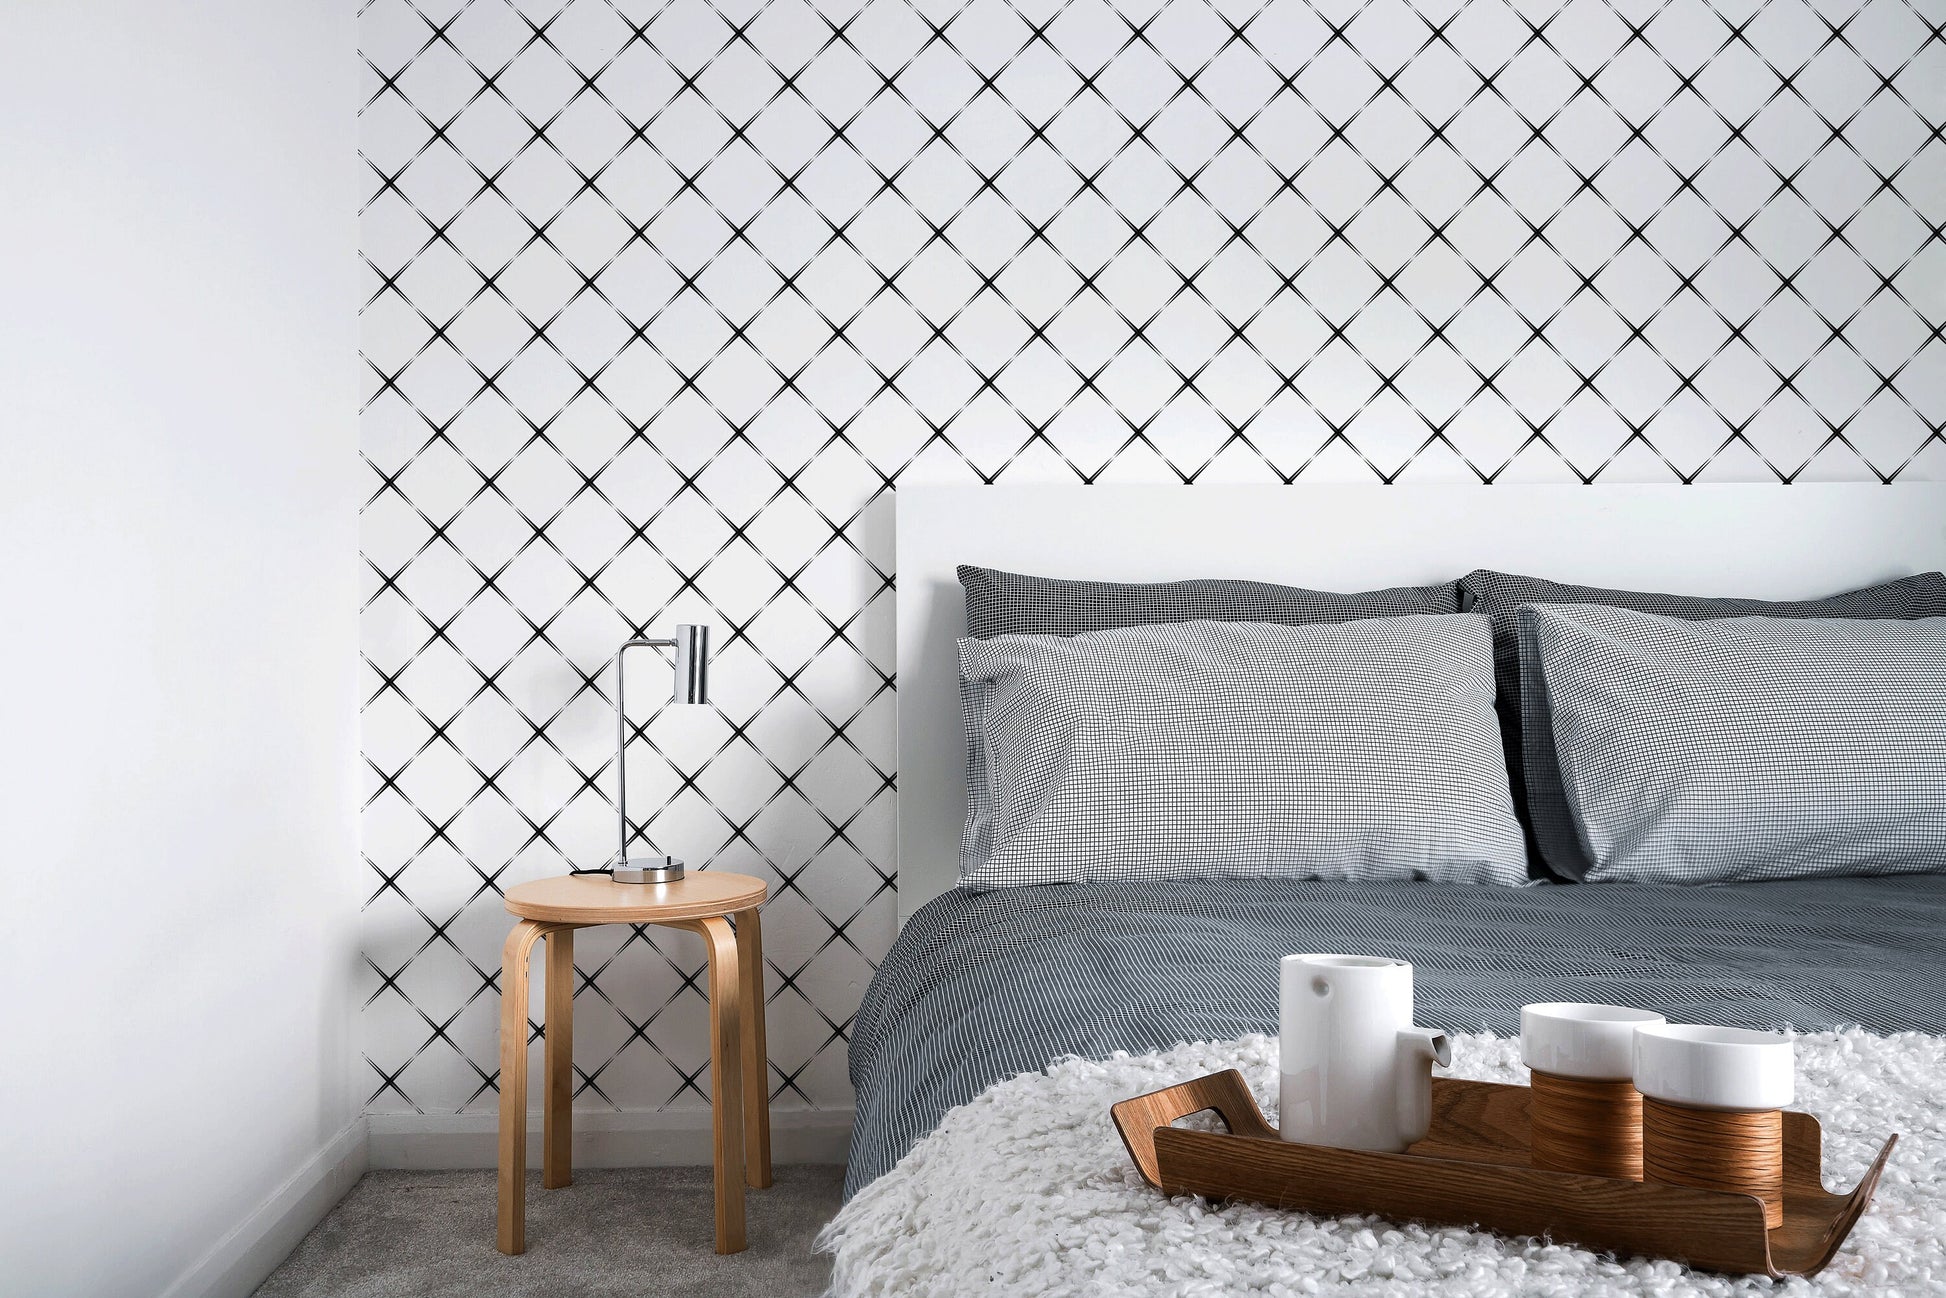 Removable Wallpaper Scandinavian Wallpaper Minimalist Geometric Wallpaper Peel and Stick Wallpaper Wall Paper - B050